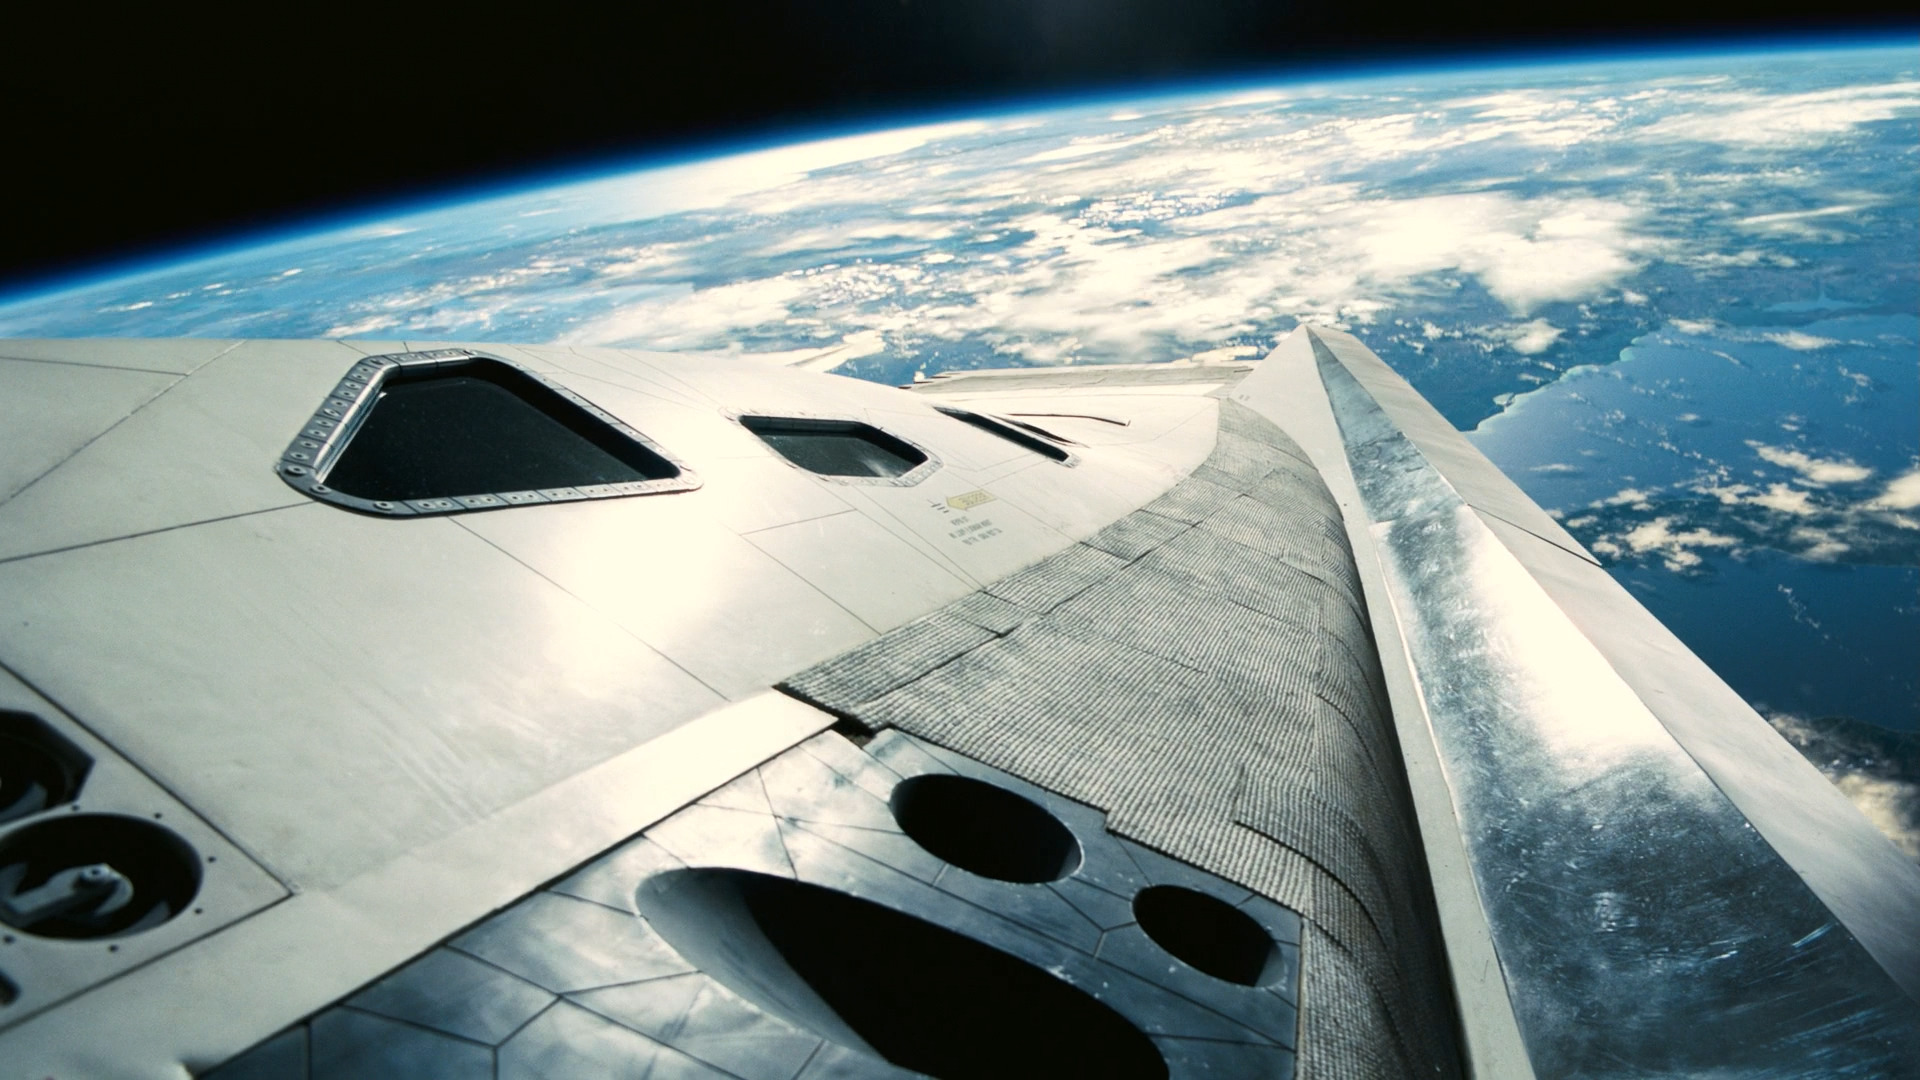 Interstellar (movie), Film Stills, Movies Wallpapers HD ...